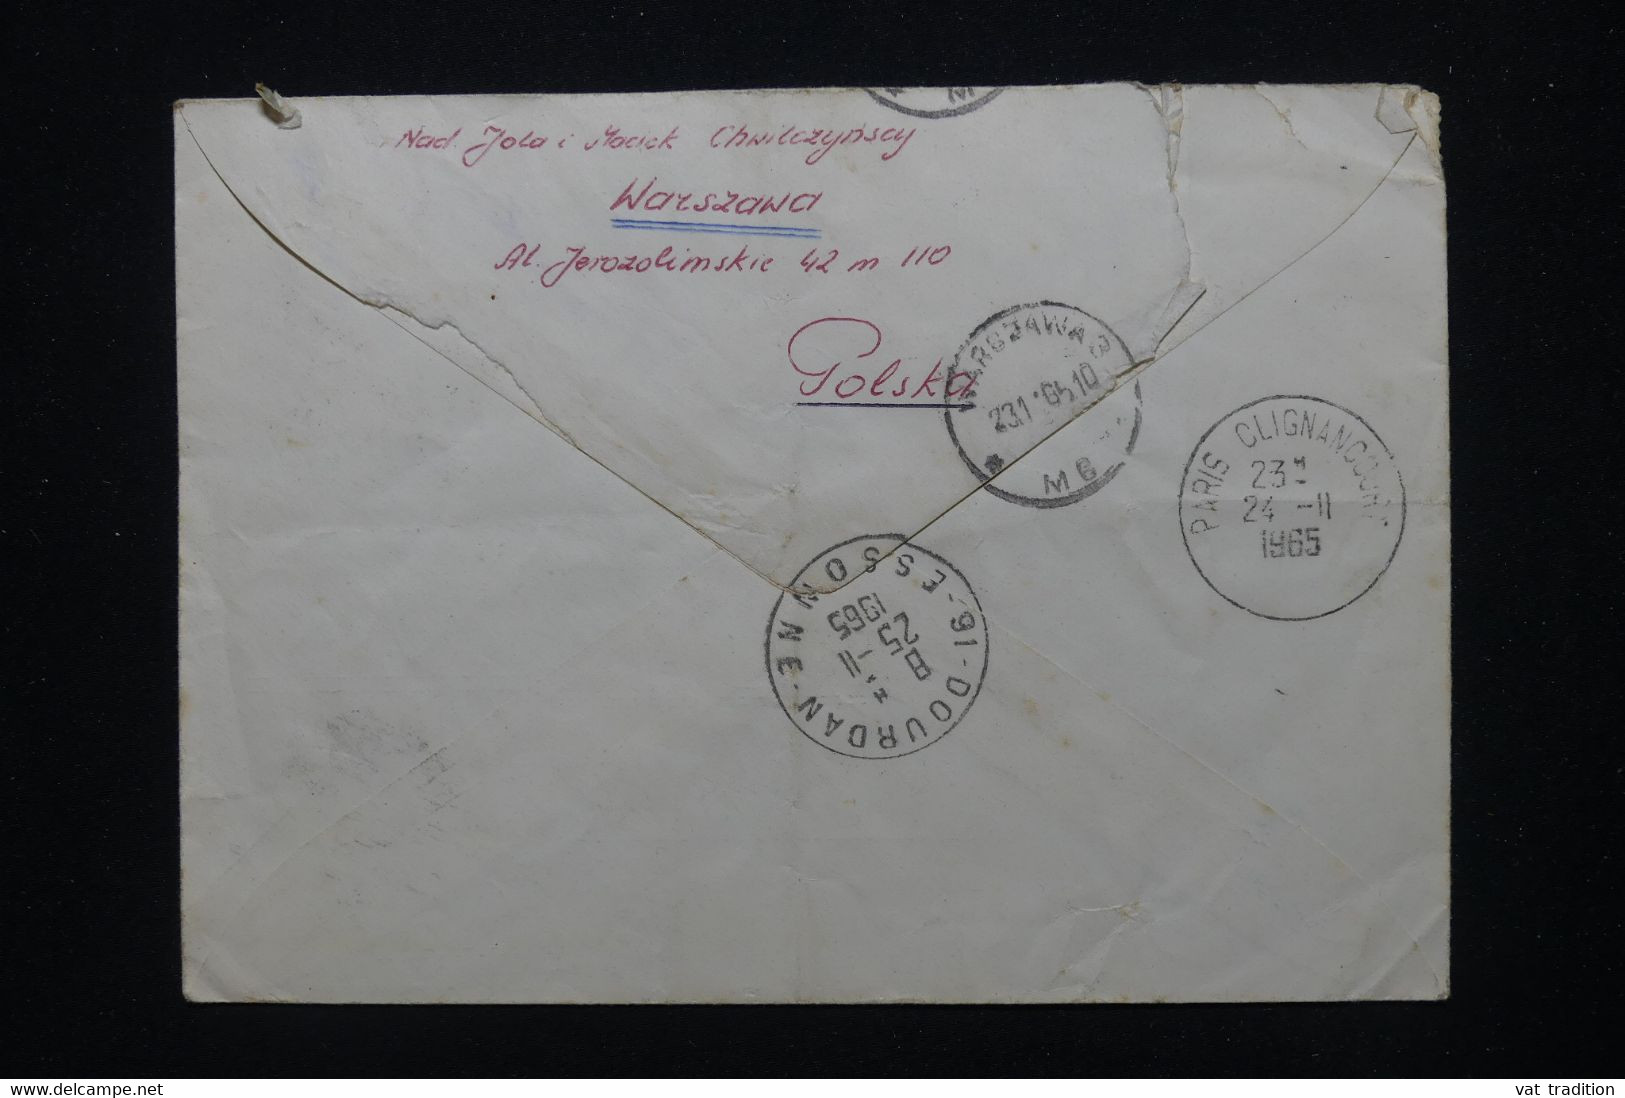 POLOGNE - Enveloppe En Exprès De Warszawa Pour Paris En 1965 - L 116142 - Covers & Documents